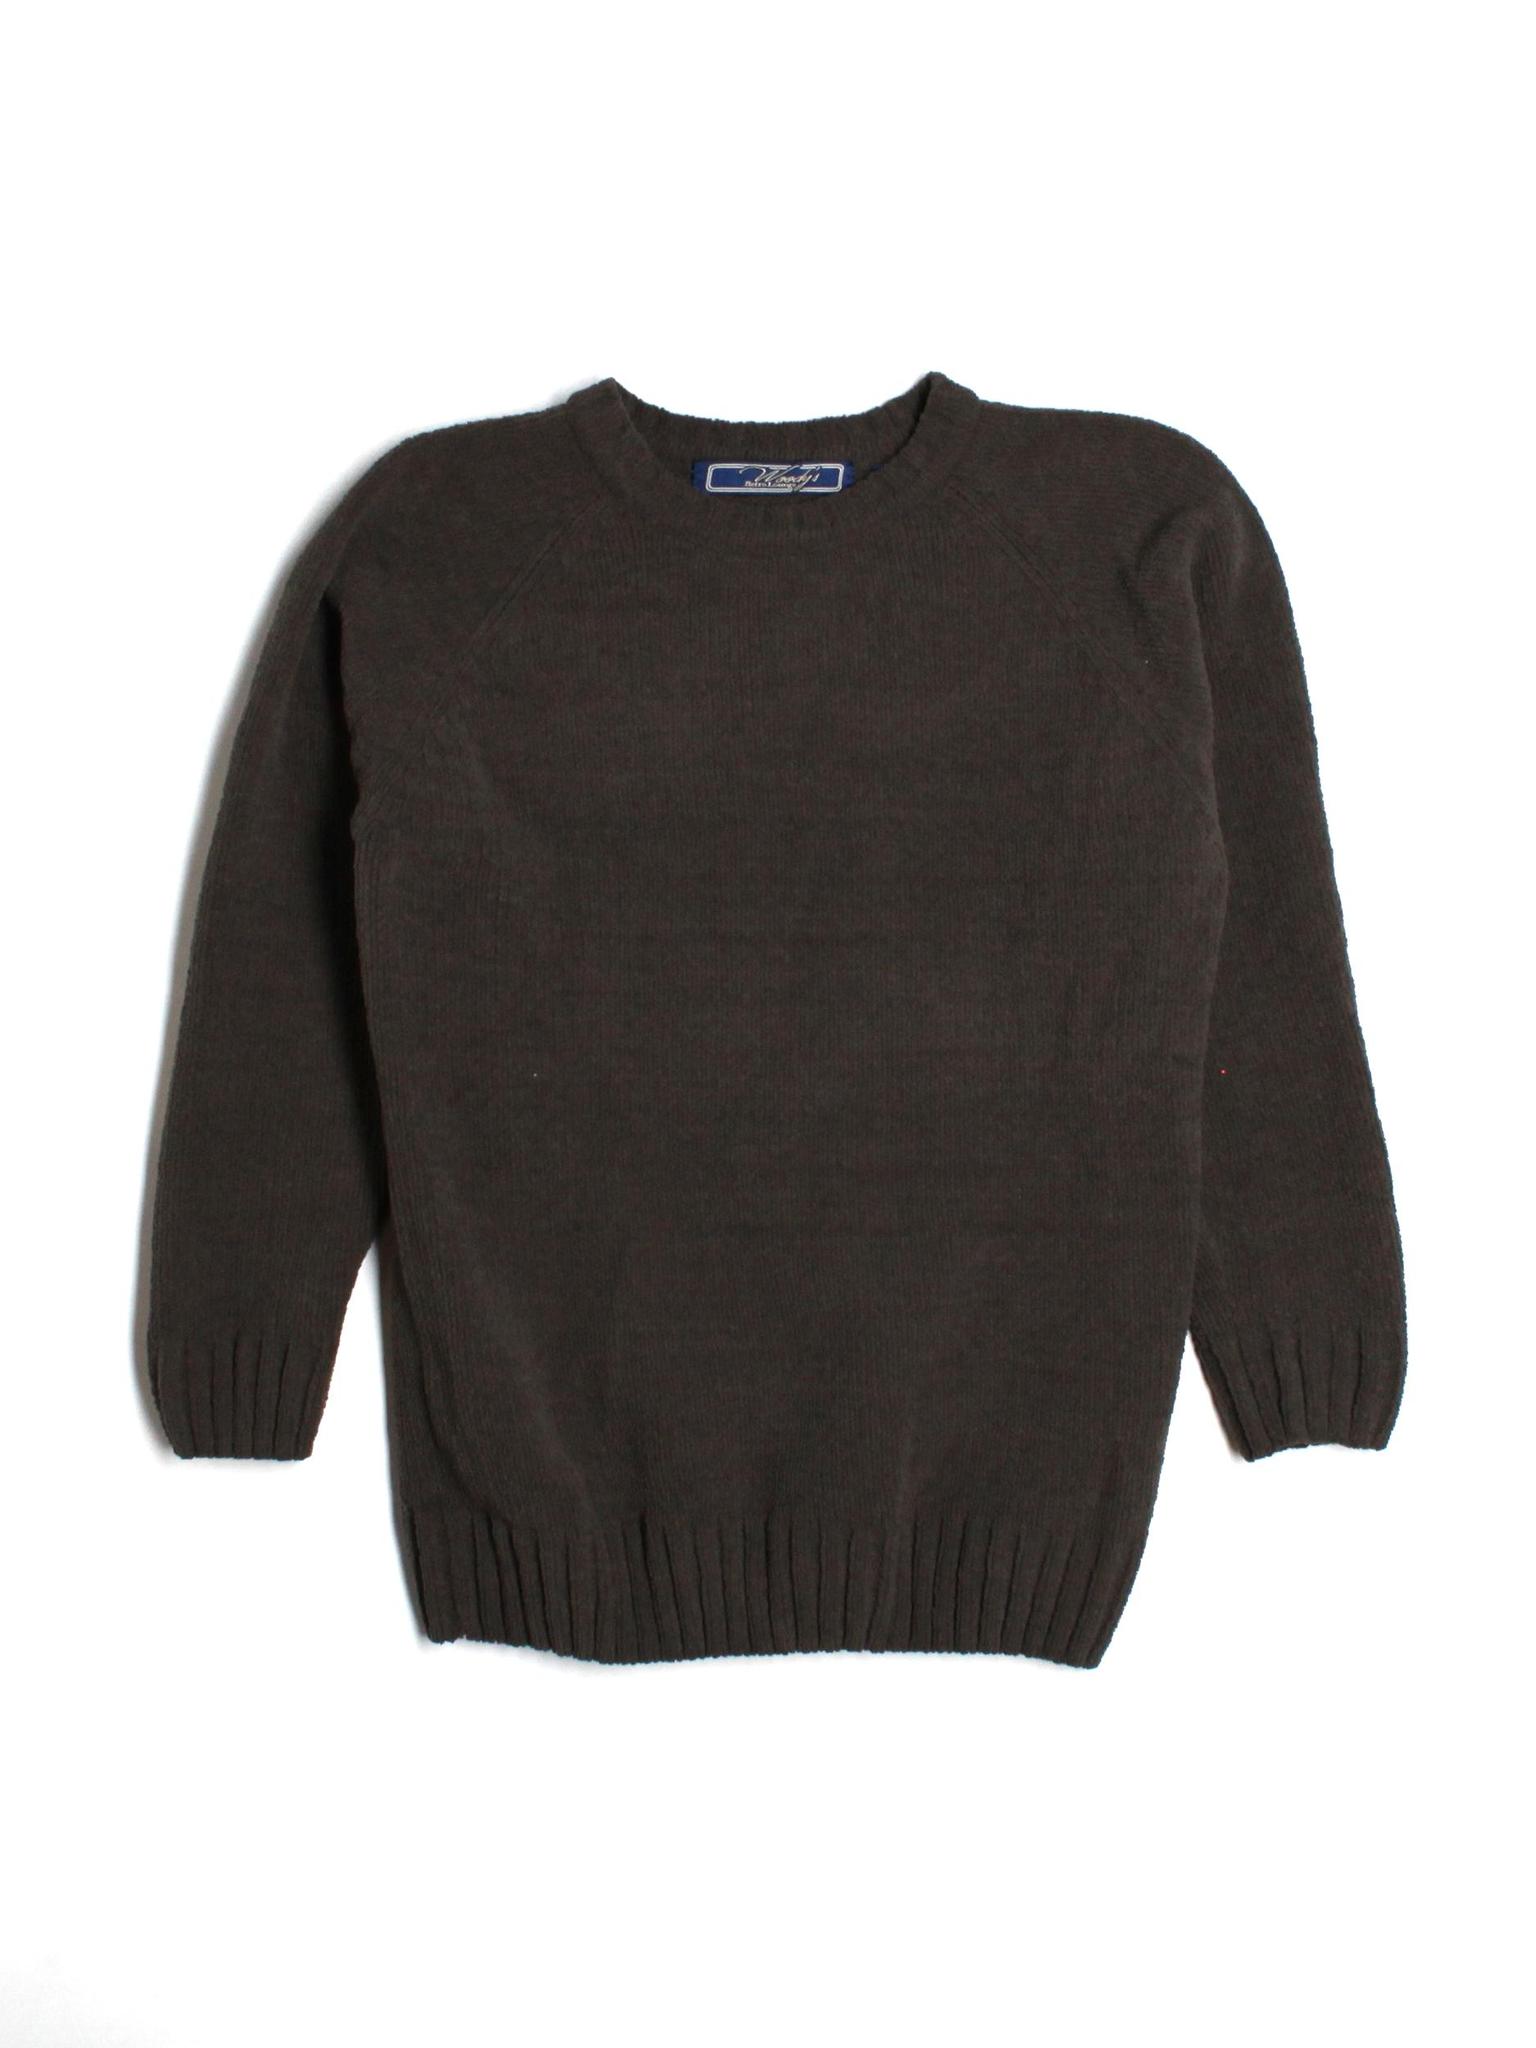 Woody's Retro Lounge Gray Heavy Sweater Size 7 - 80% off | thredUP